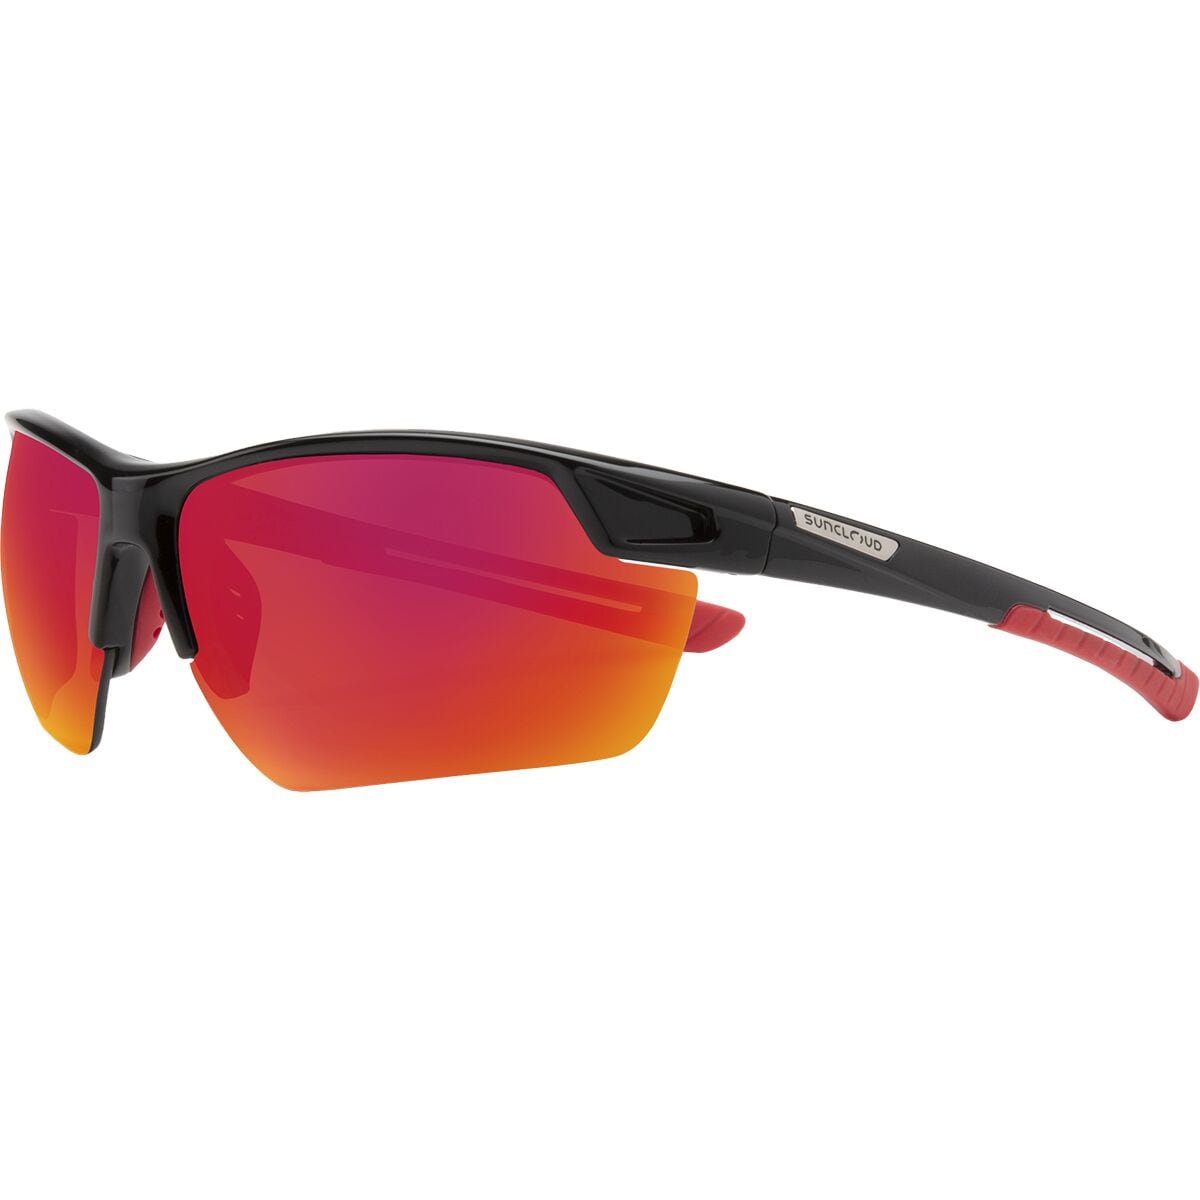 Поляризованные солнцезащитные очки contender Suncloud Polarized Optics, цвет black/polarized red mirror очки солнцезащитные stylemark polarized l1504a